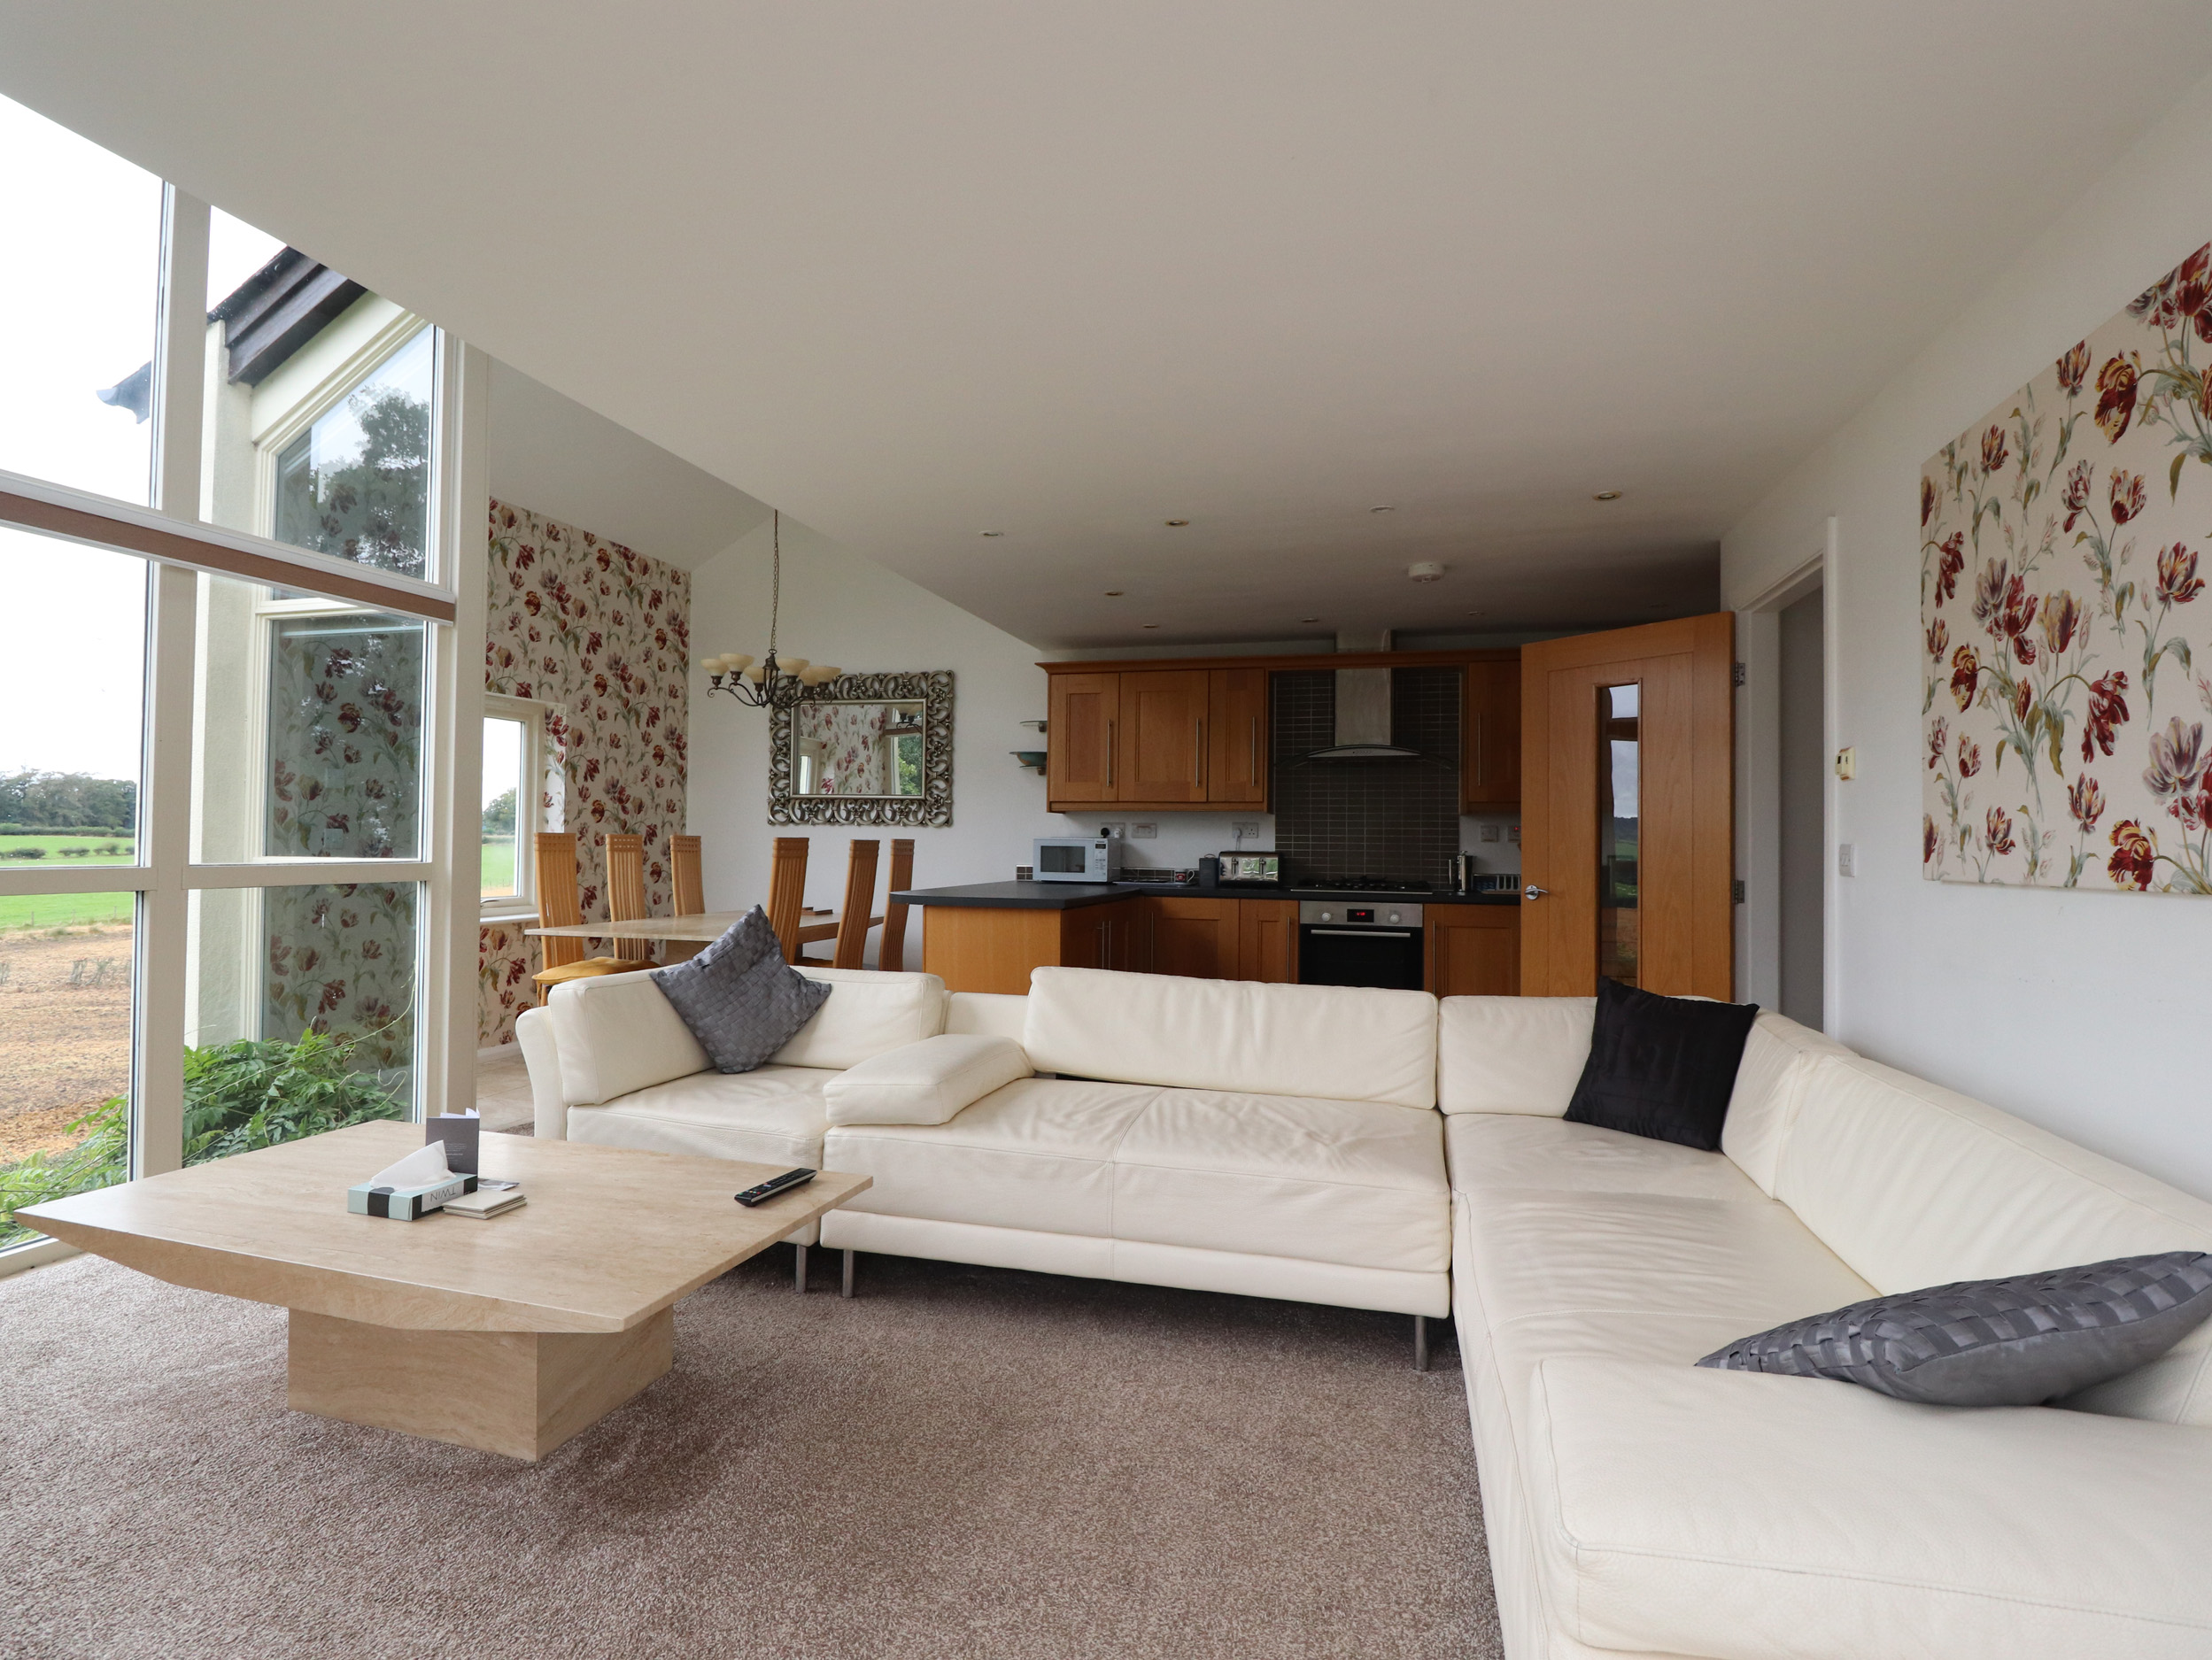 3 bedroom Cottage for rent in Kirkby Lonsdale